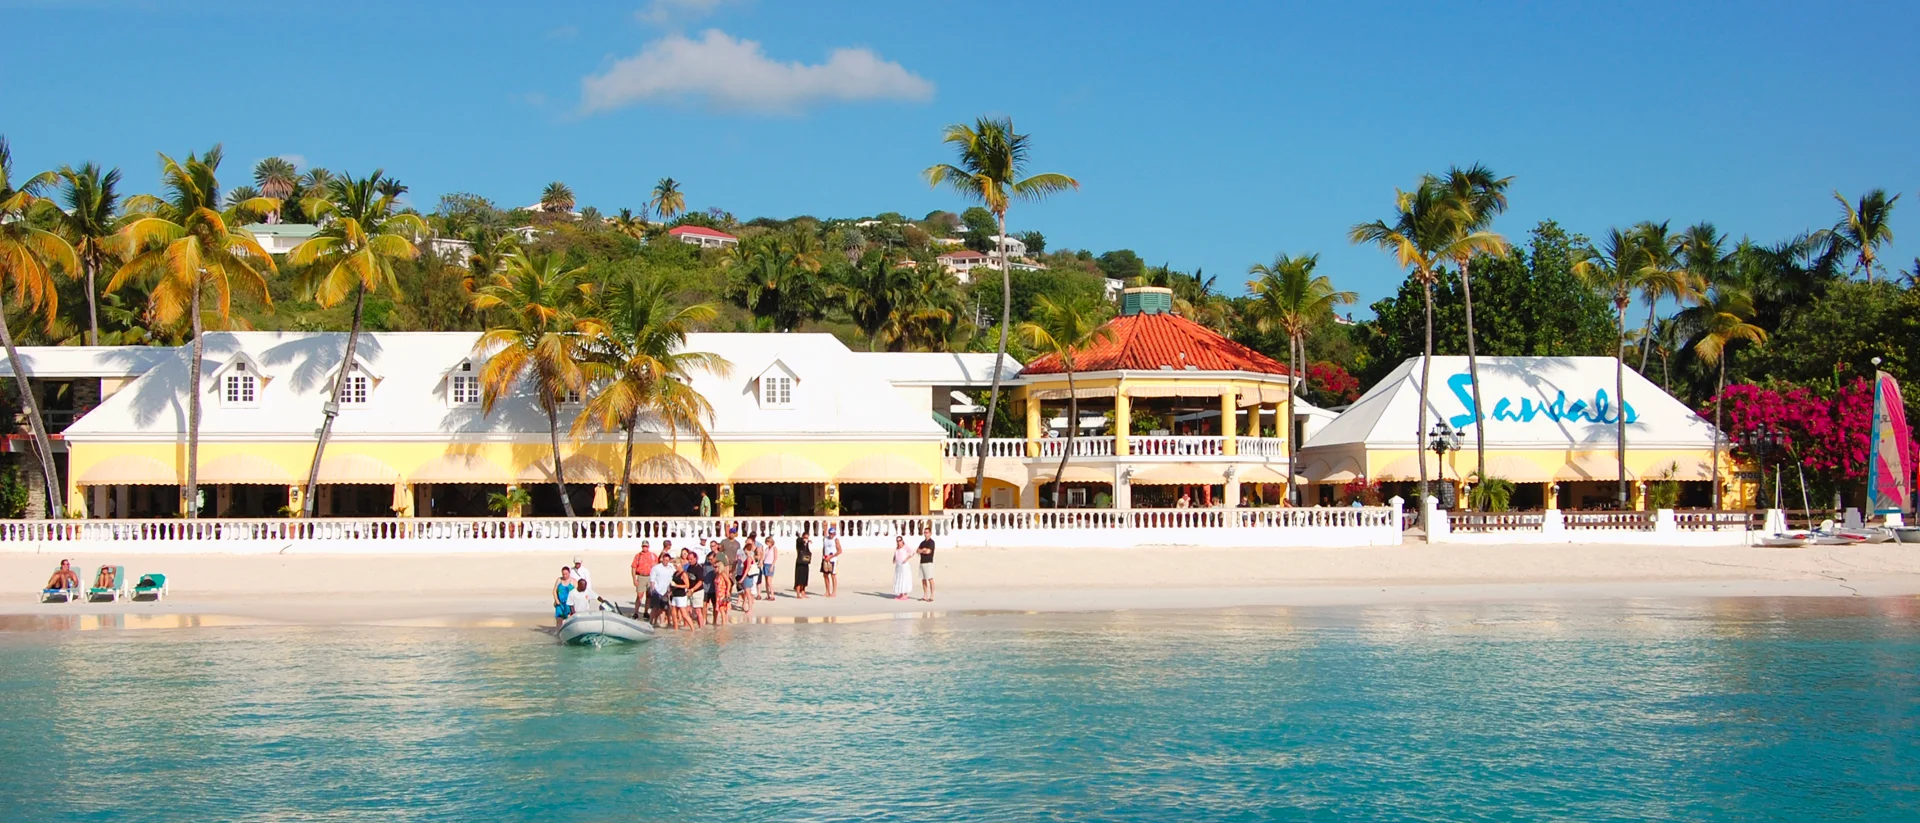 Antigua strand zeilen charter